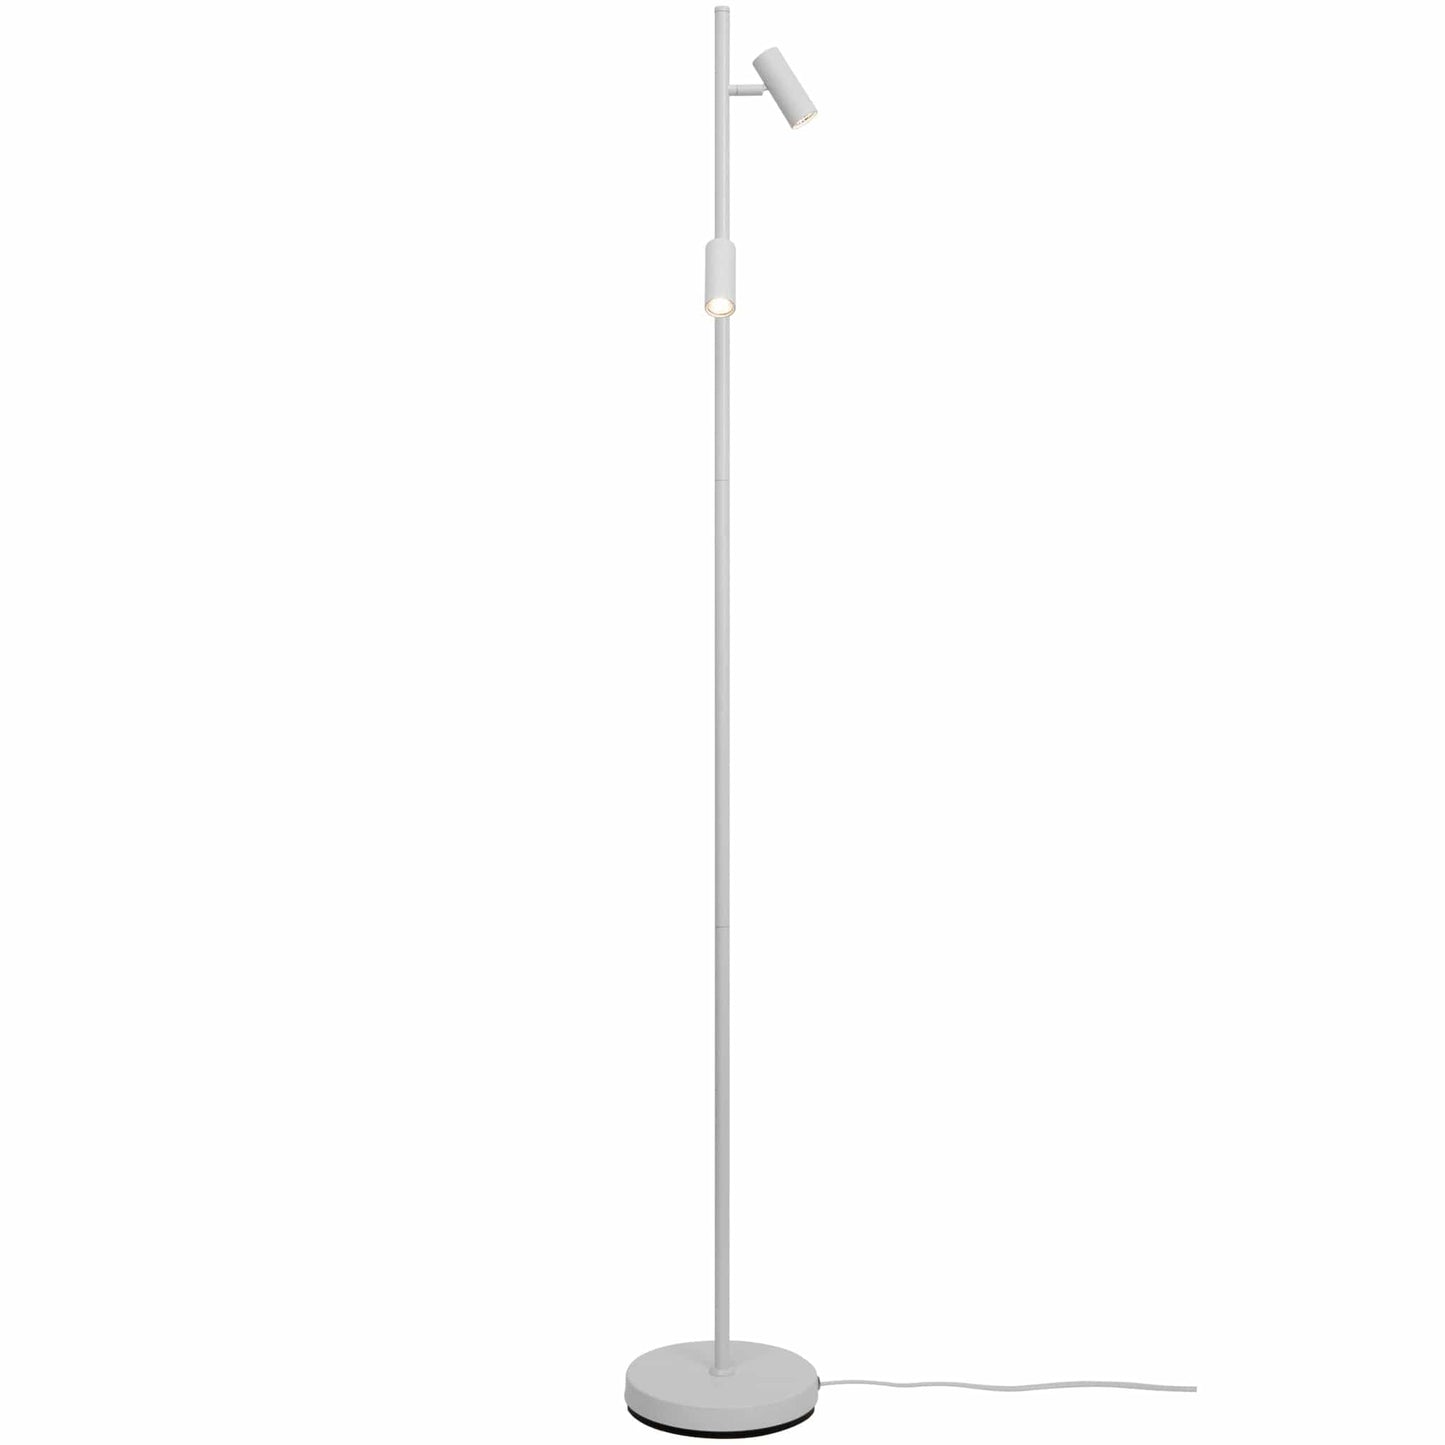 Nordlux Floor Lamp Omari Floor Lamp, black or white